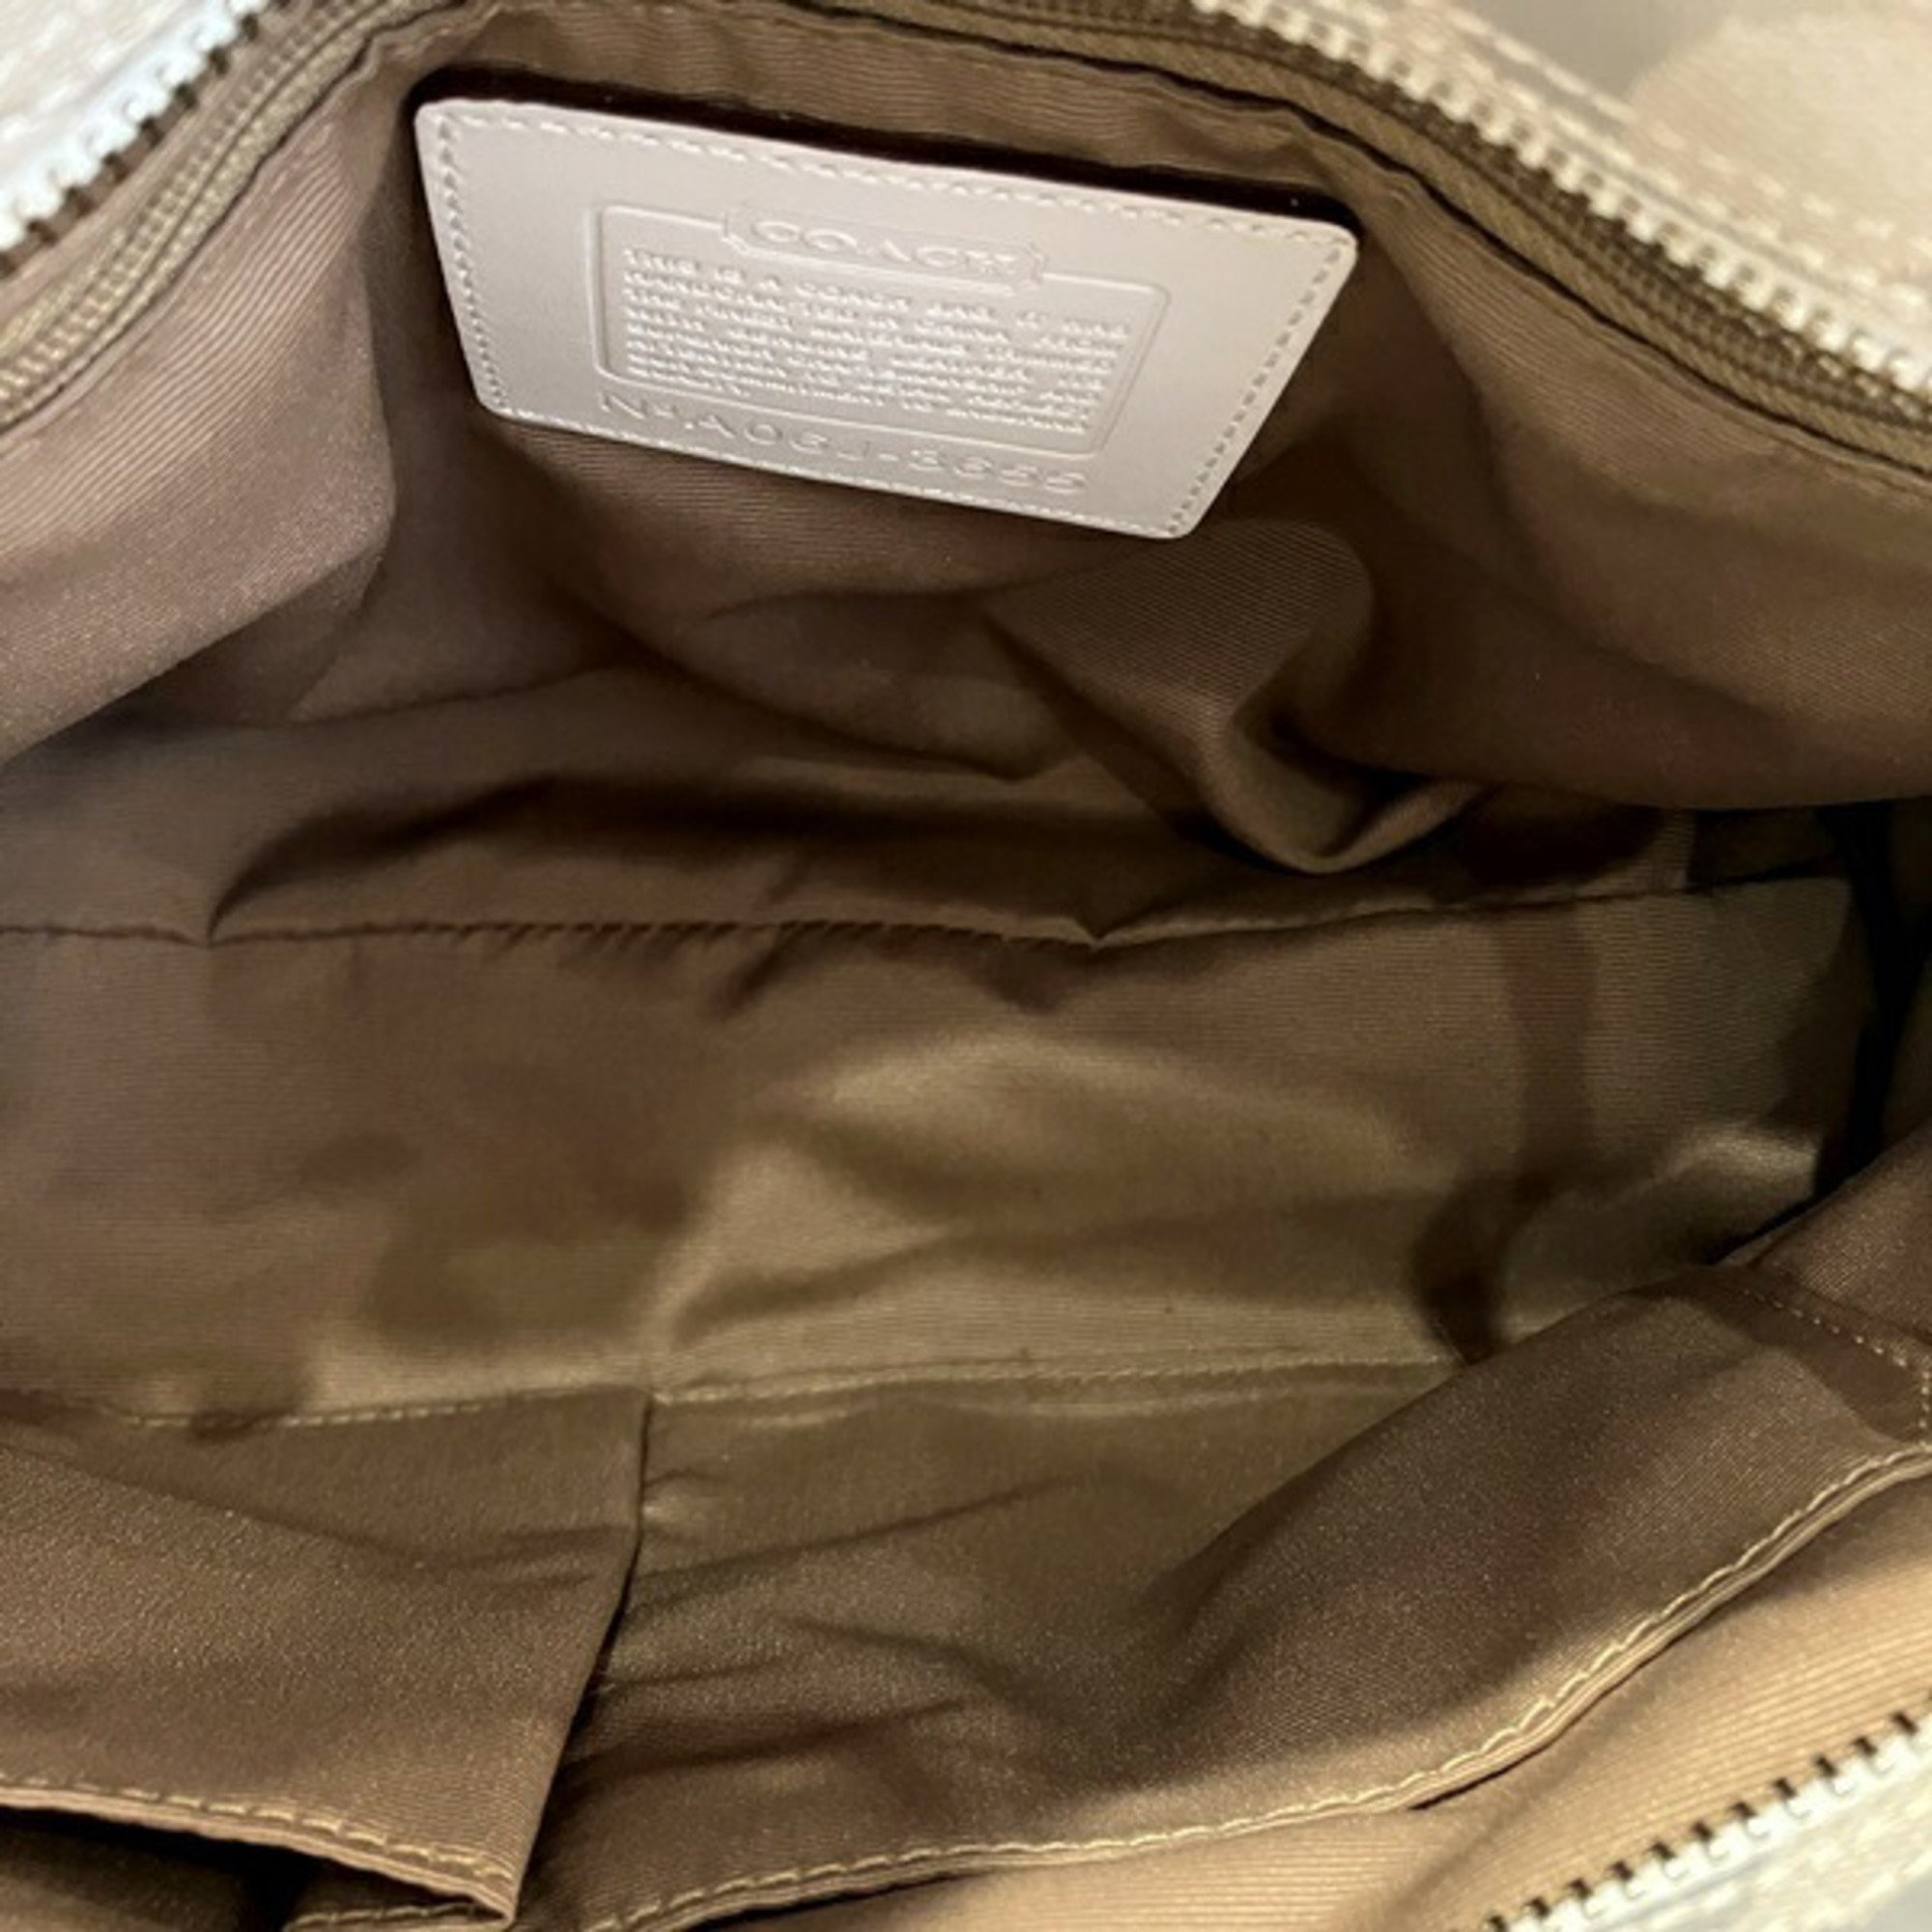 Coach COACH Signature 3655 Off-white x Gold Brown Canvas Leather Bag Handbag Women's